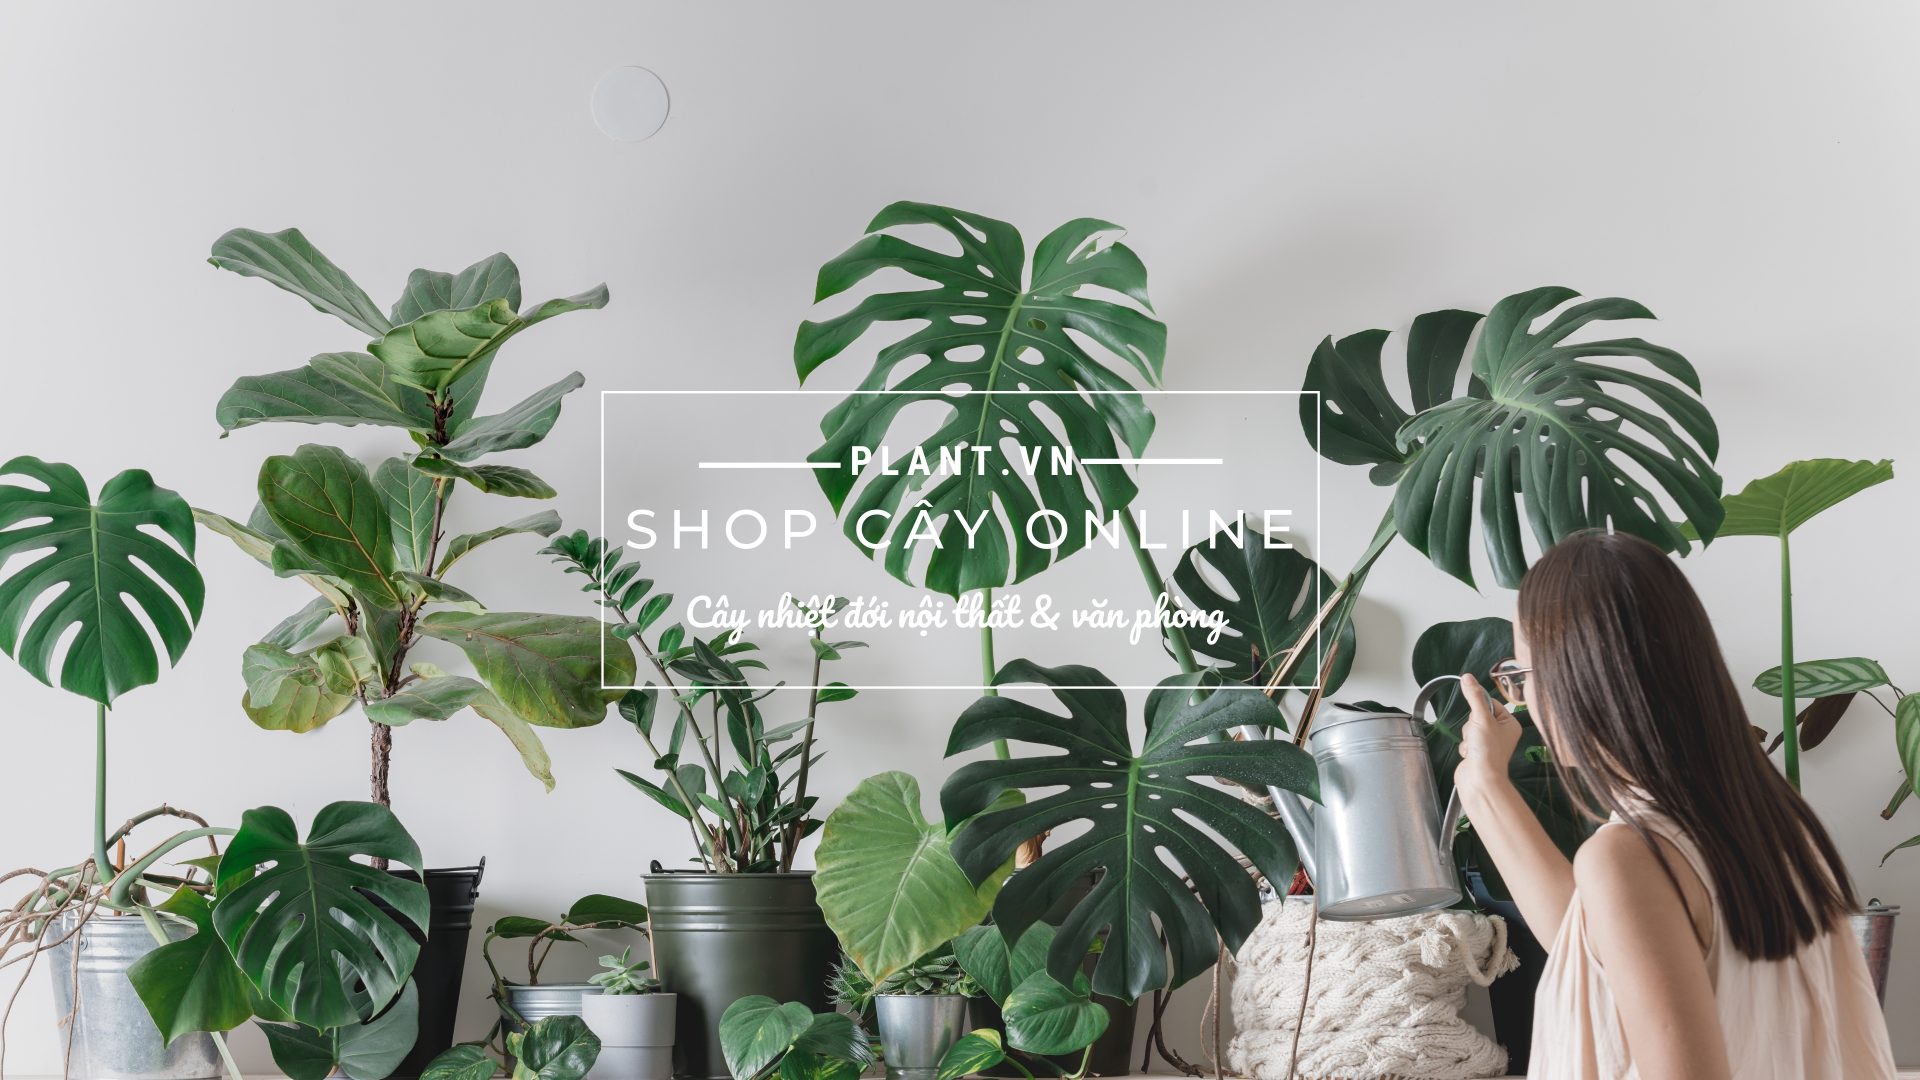 Shop cây online plant.vn